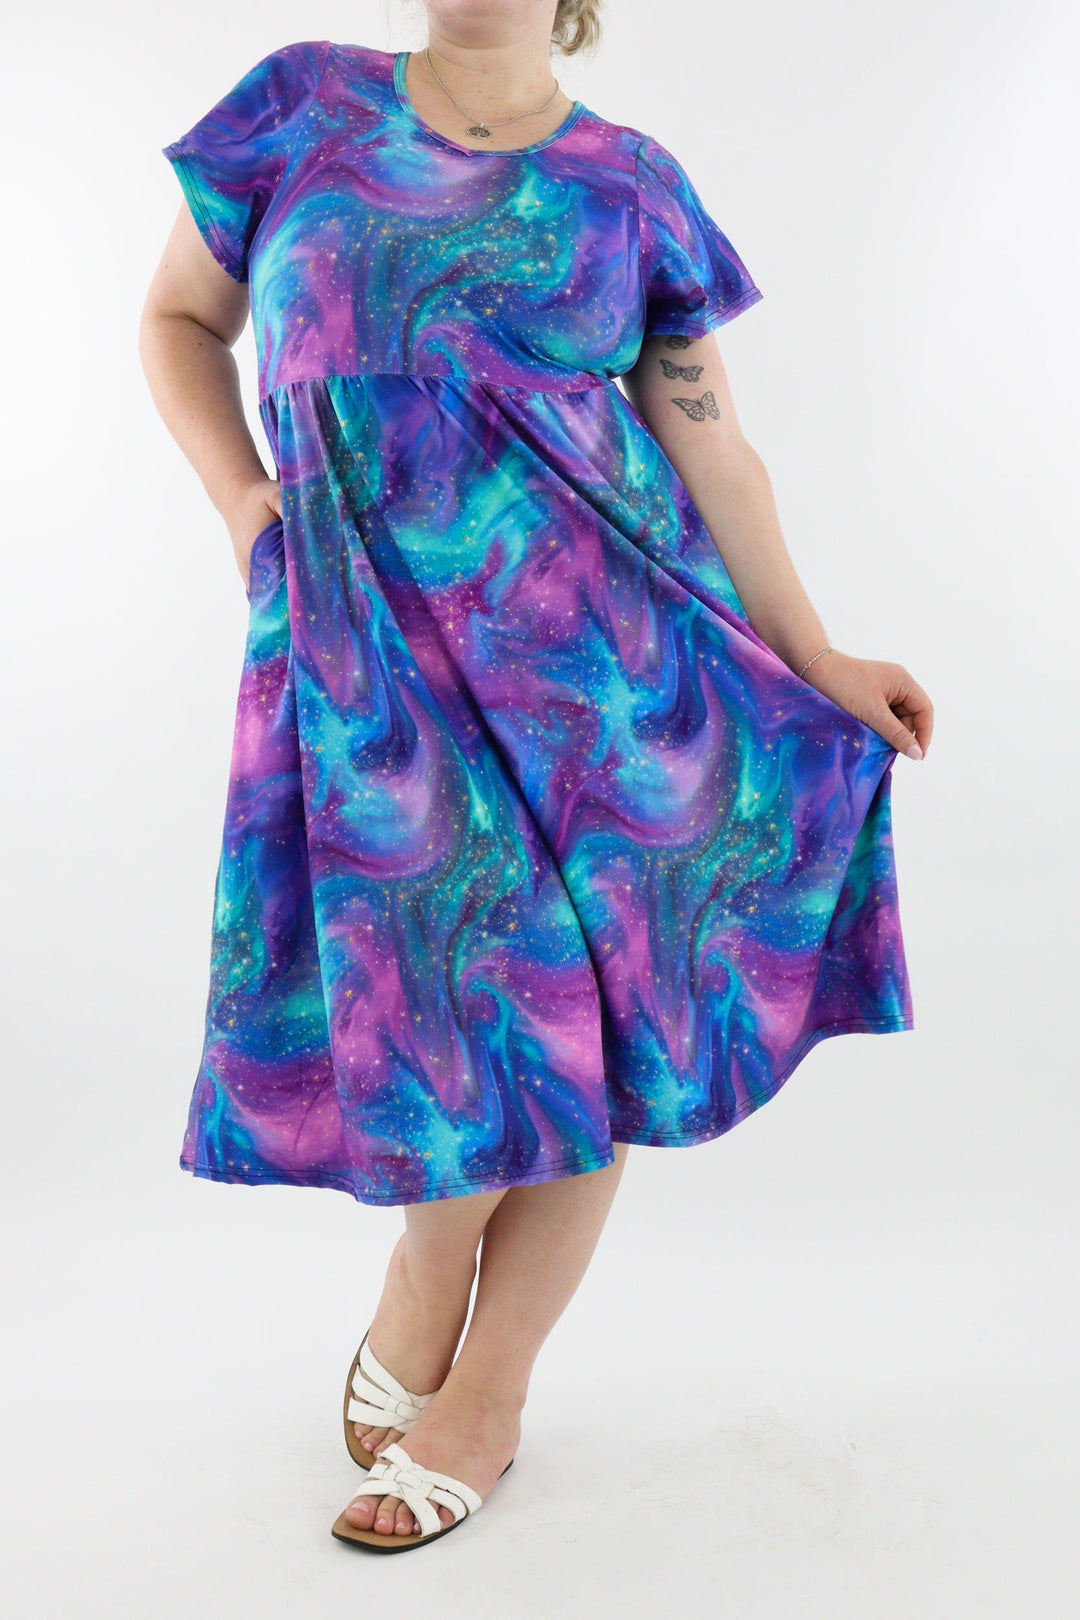 Aurora Sky - A-Line Dress - Midi Length - Side Pockets - Pawlie